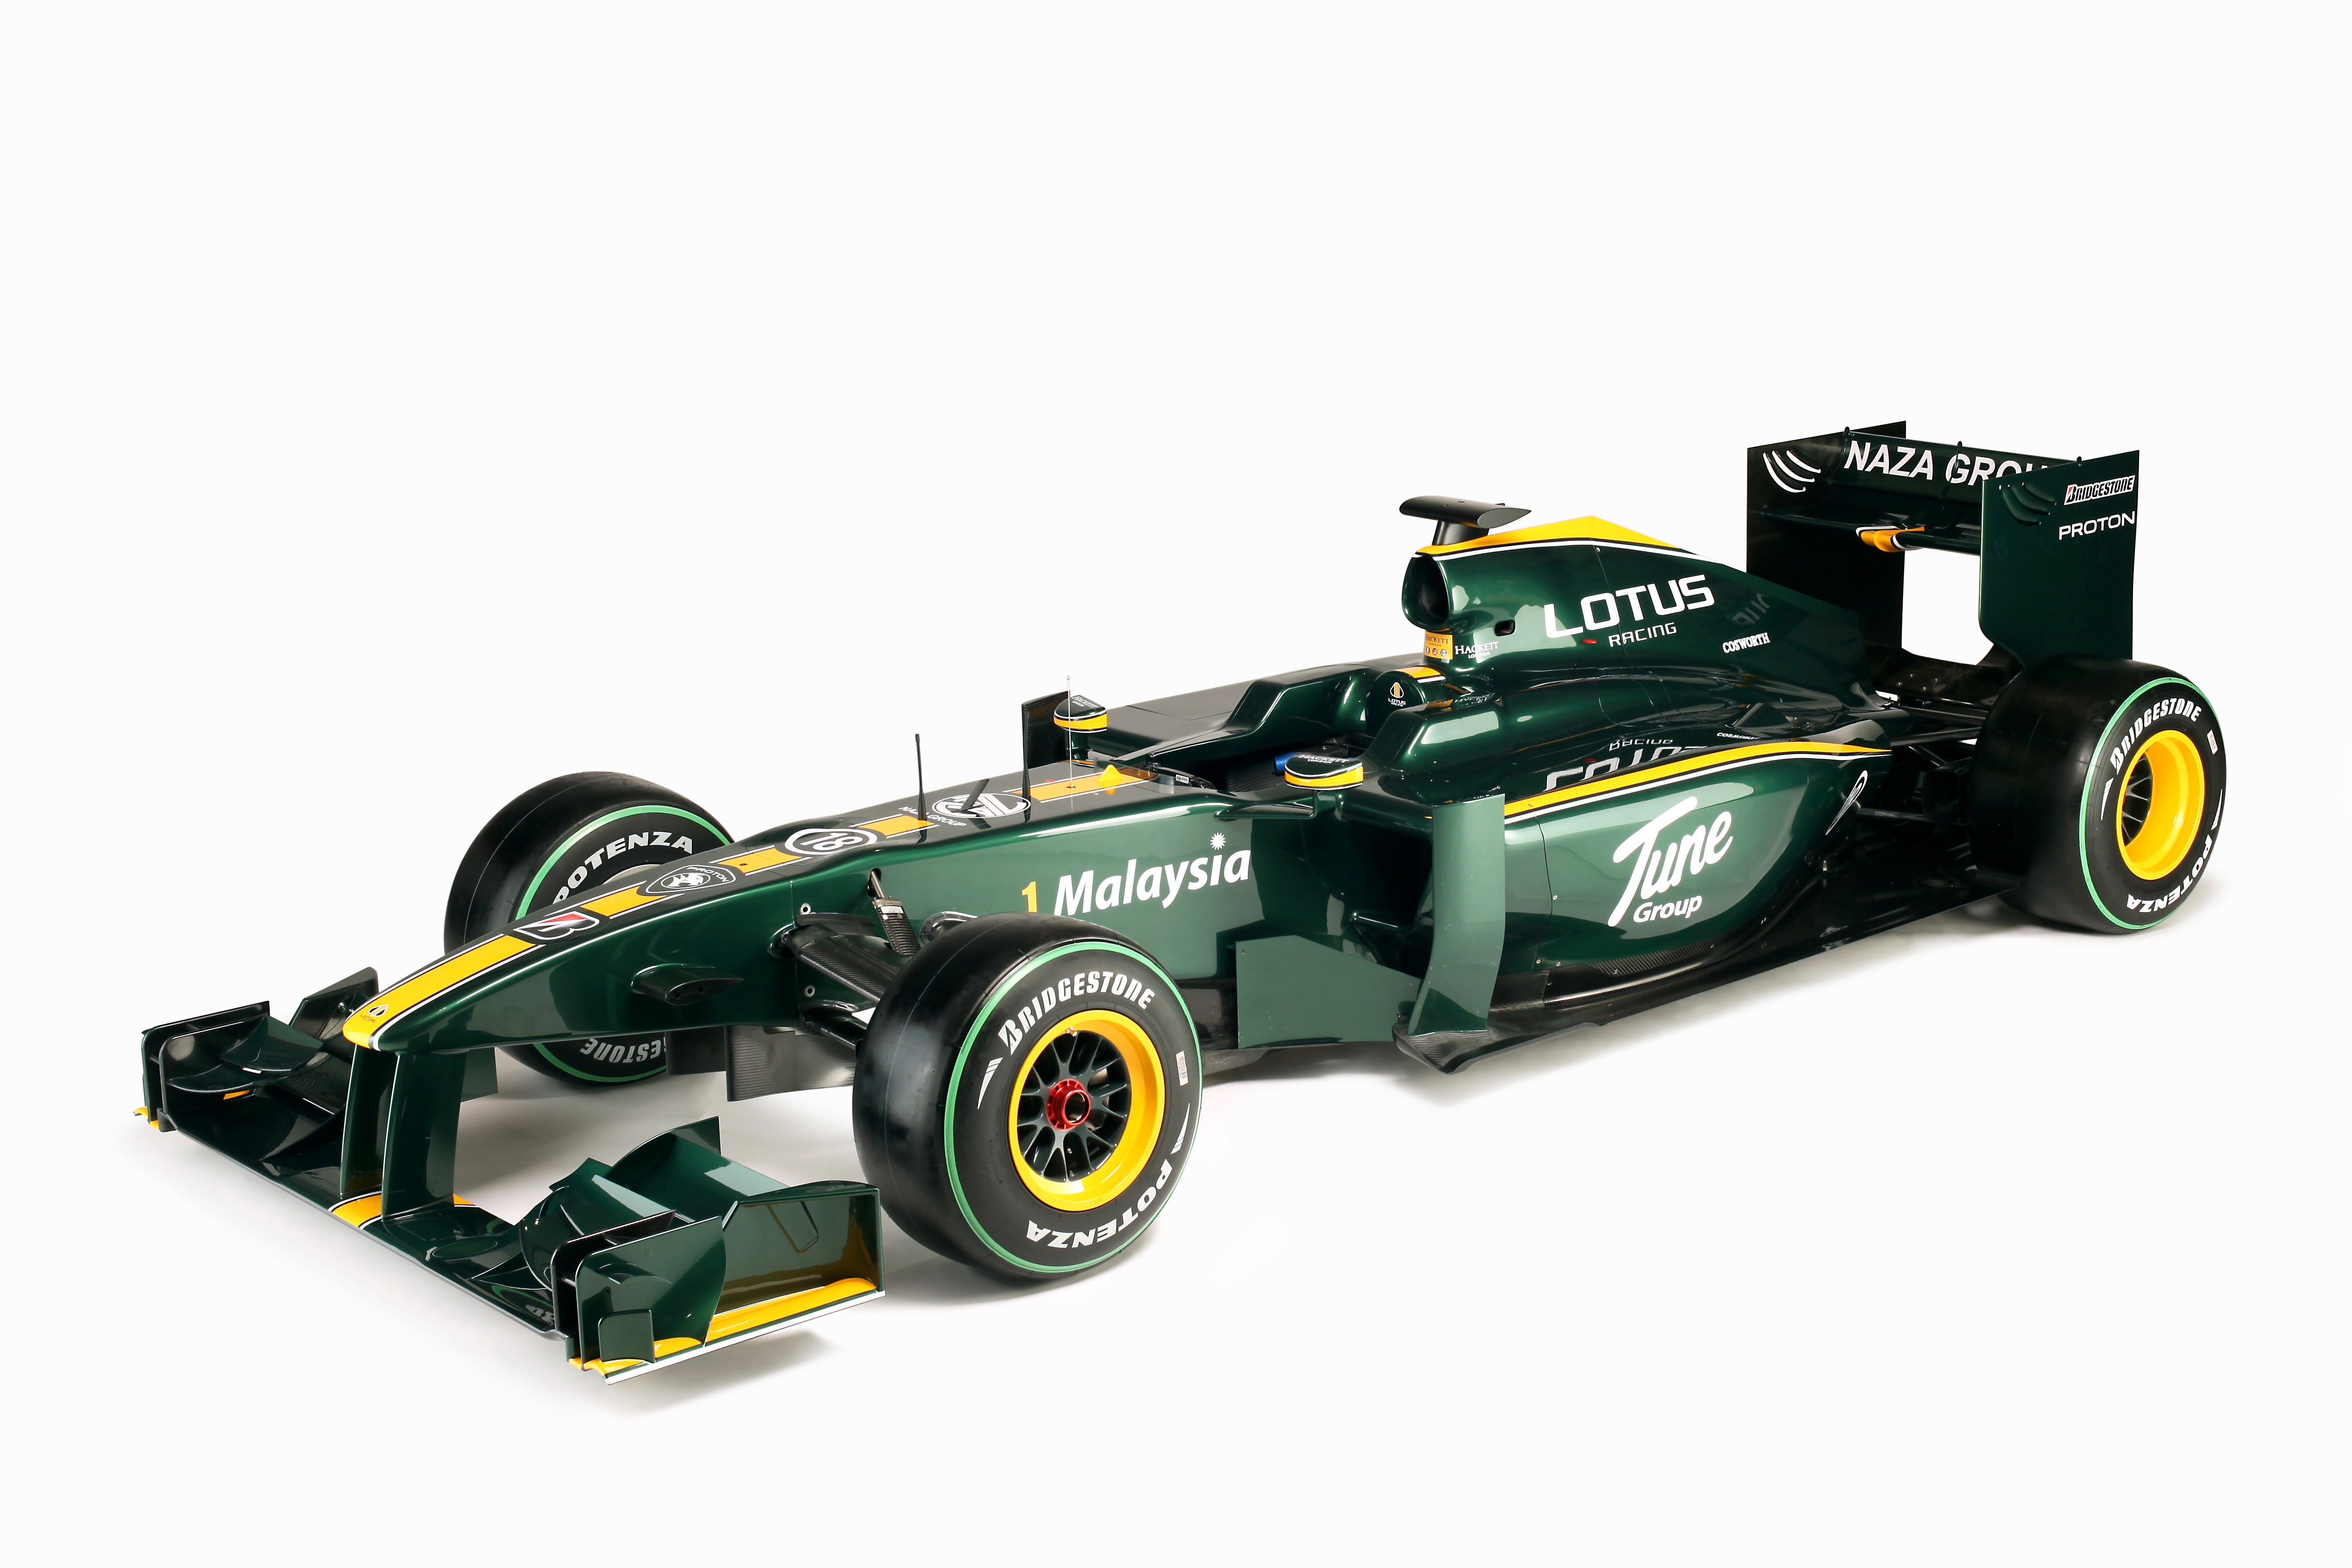 F1, Zielony, Lotus, Tune Group